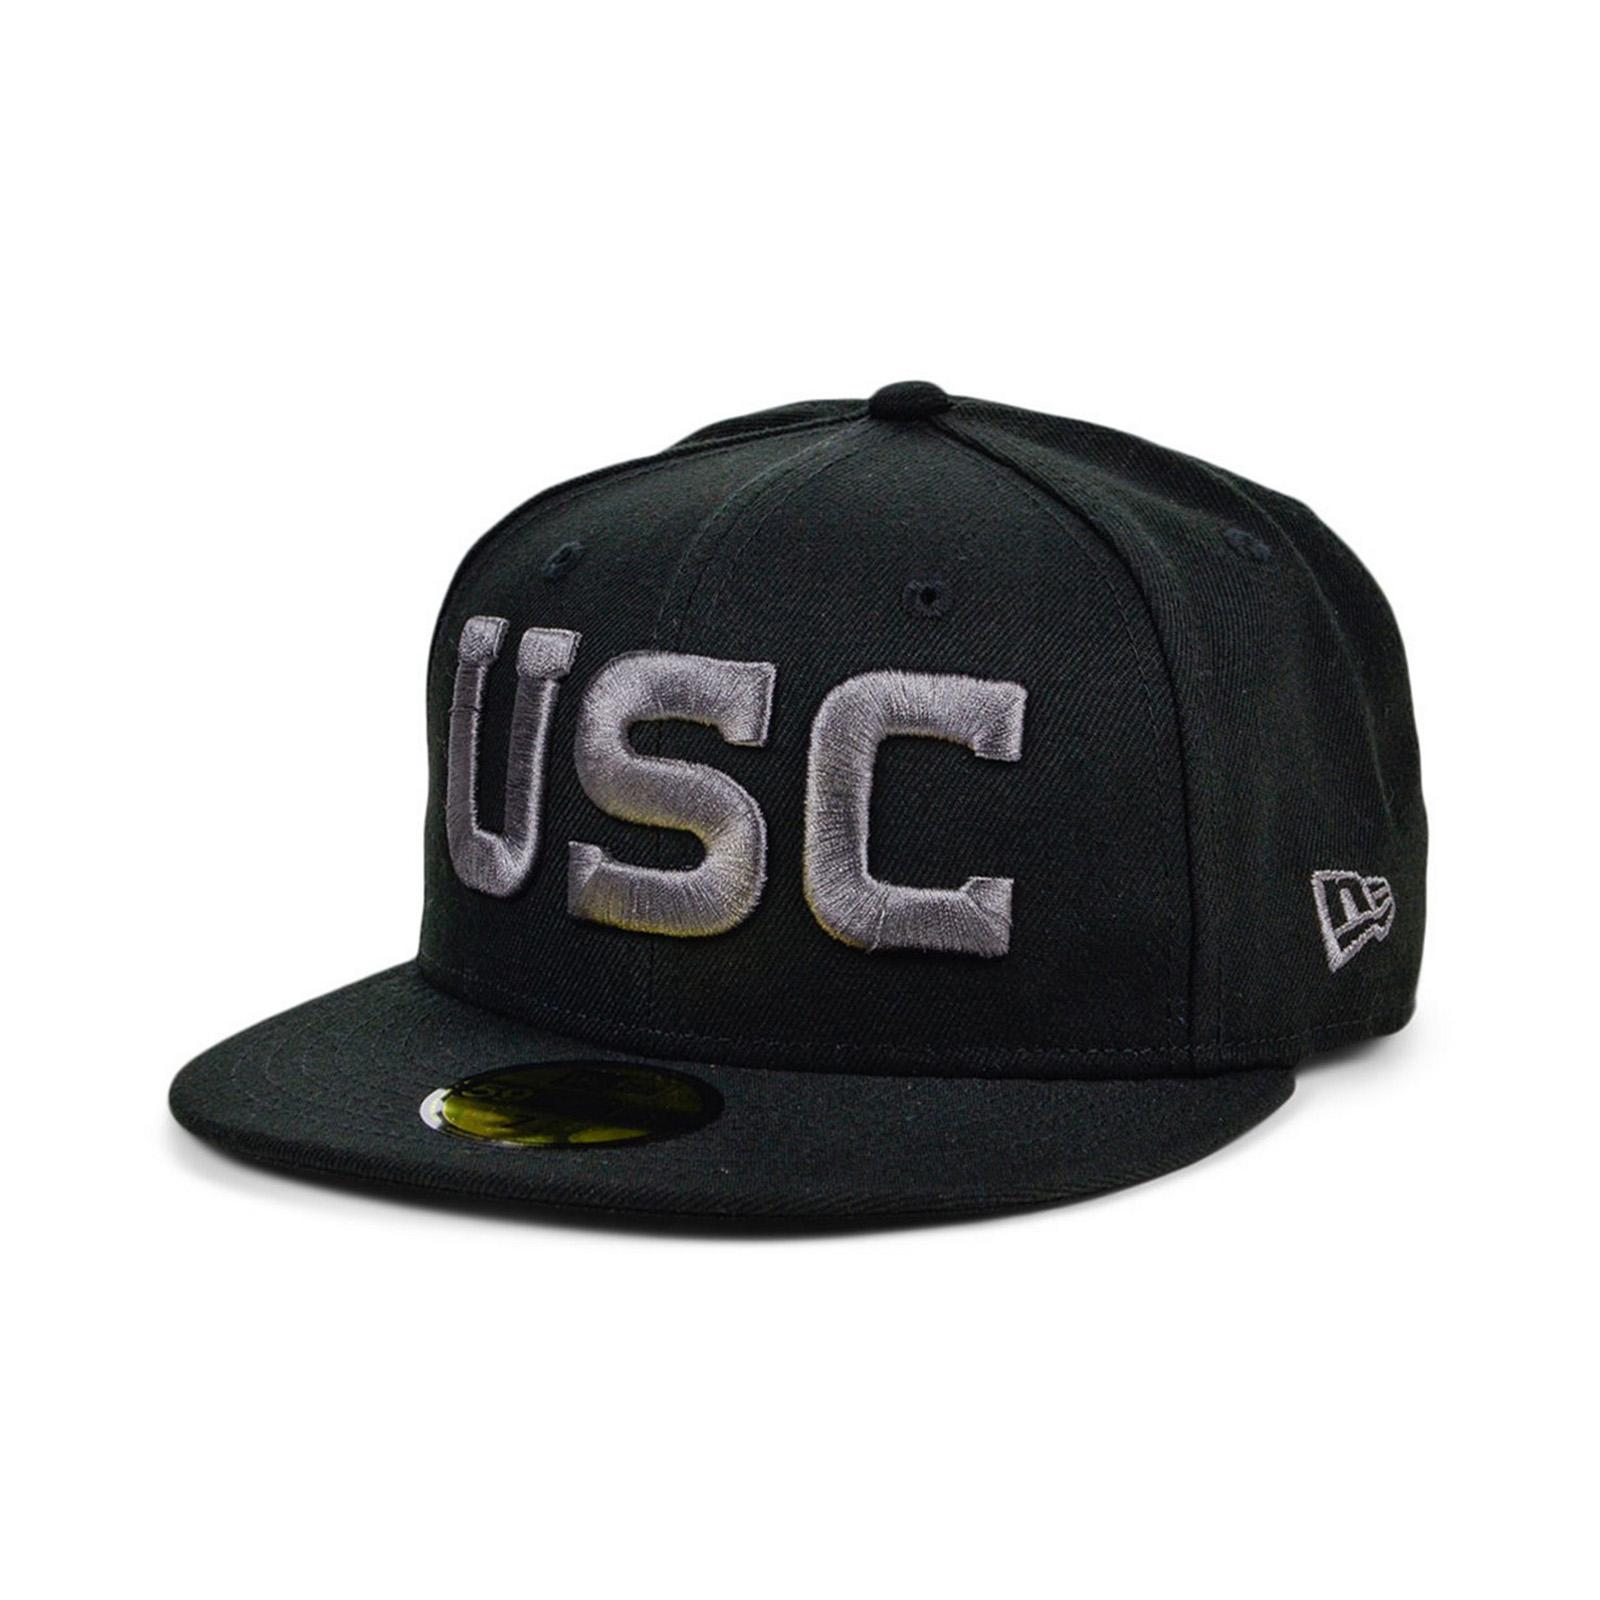 USC Mens Core Cap 5950 Black By New Era image01